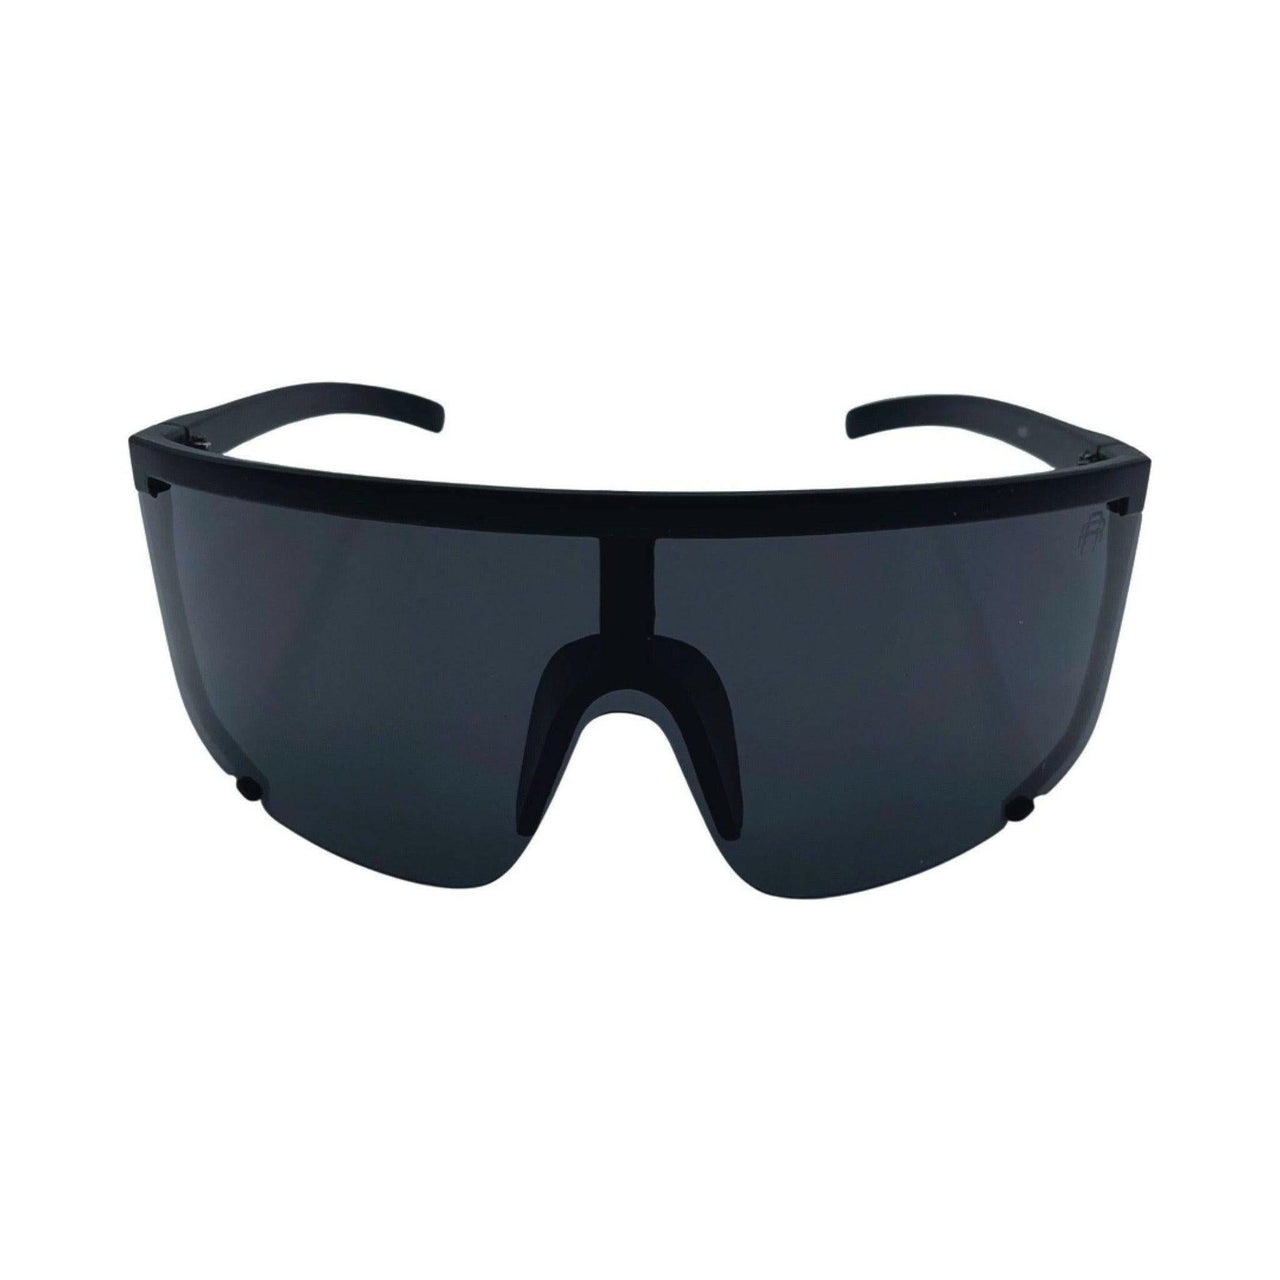 Steezy Gloss Black Sunglasses - Rebel Reaper Clothing Company Sunglasses